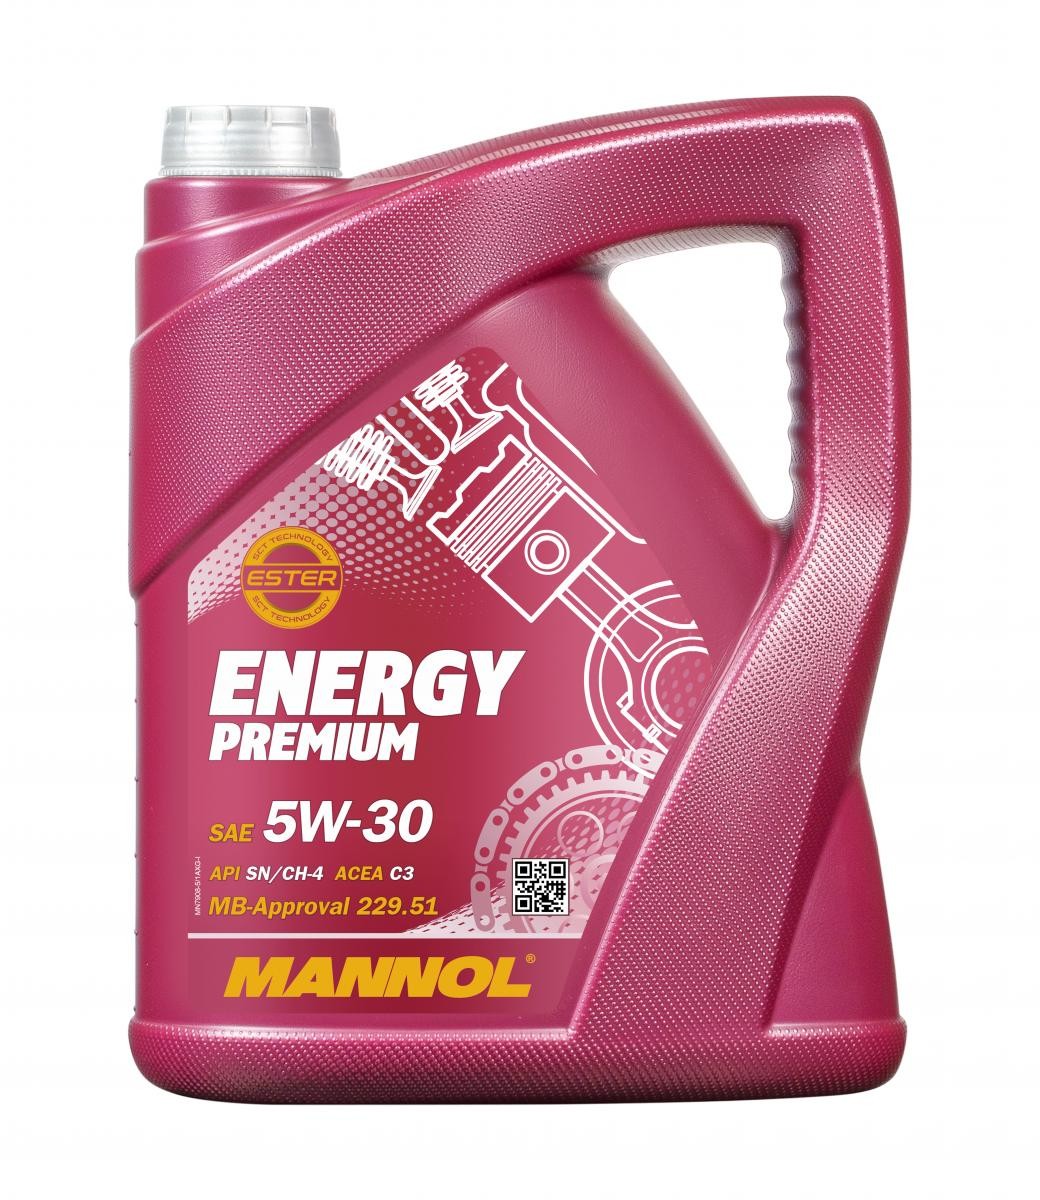 MANNOL ENERGY PREMIUM 5W-30, 5L, Synthetische olie Olie MN7908-5 koop goedkoop